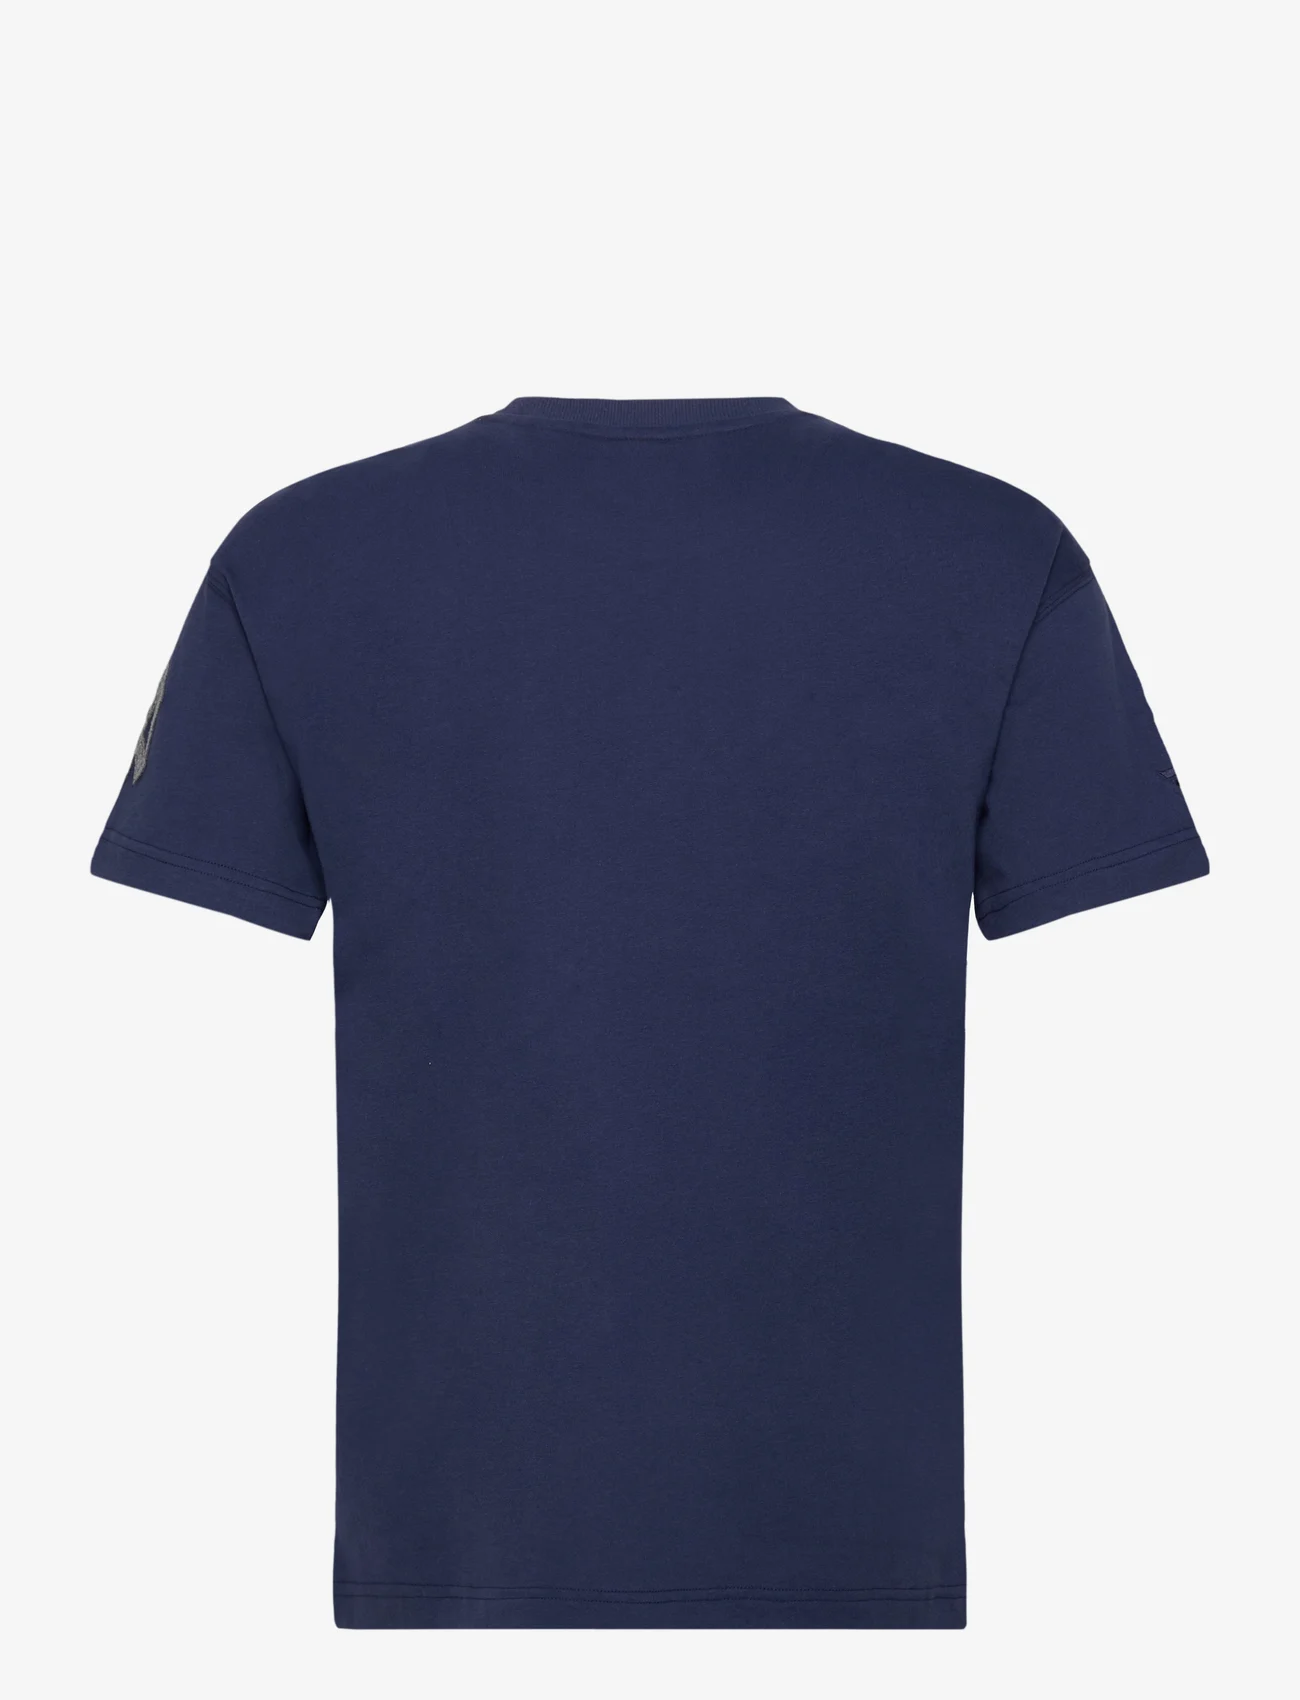 Fanatics - Nike MLB New York Yankees T-Shirt - zemākās cenas - athletic navy/signature off white - 1